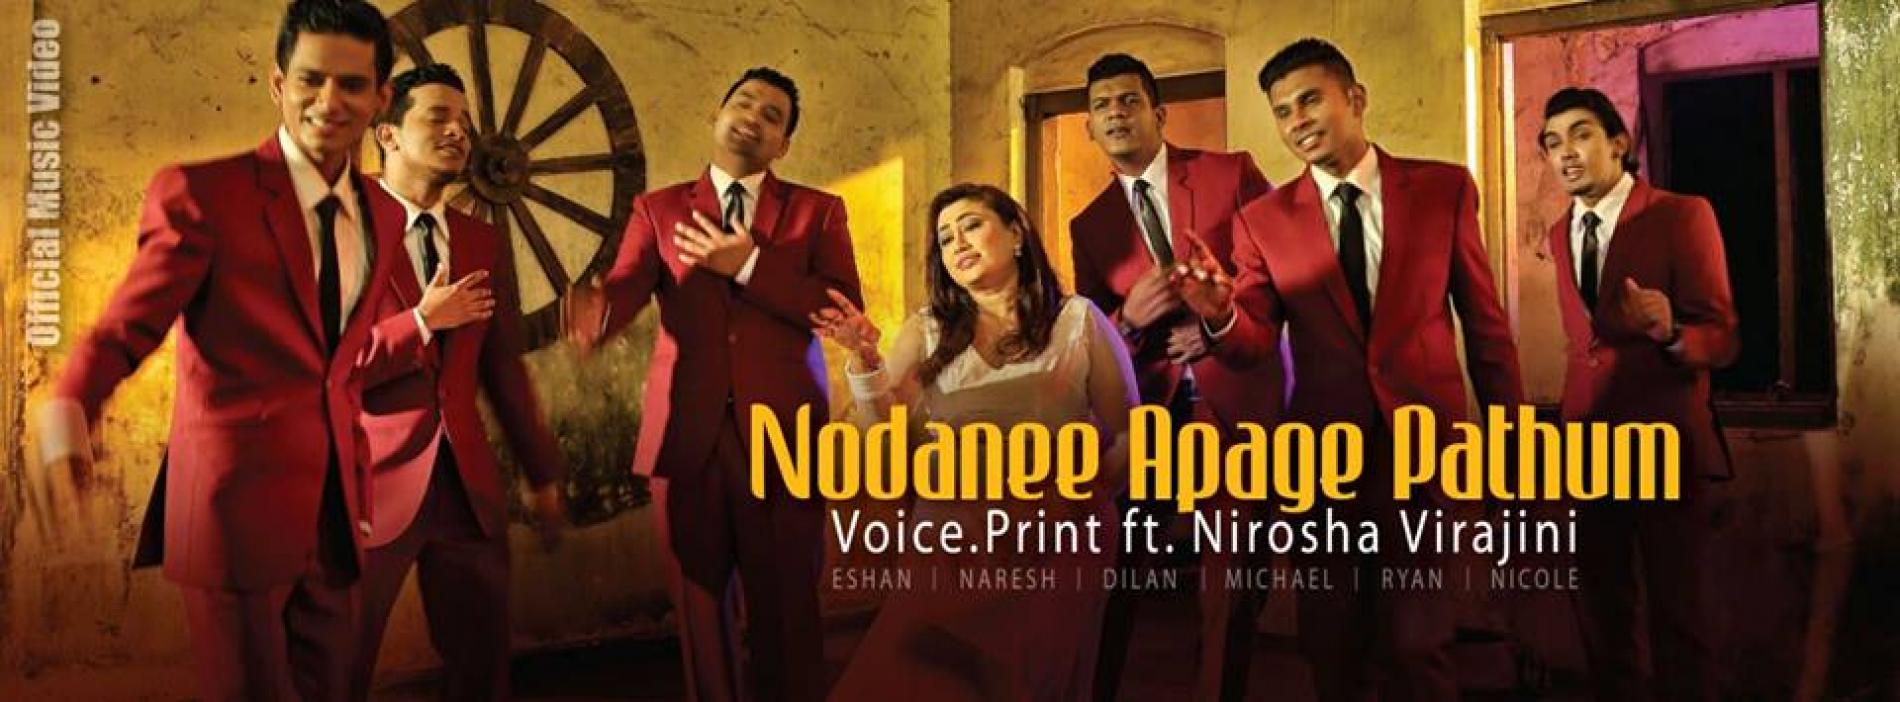 Voice.Print Ft Nirosha Virajini – Nodanee Apage Pathum